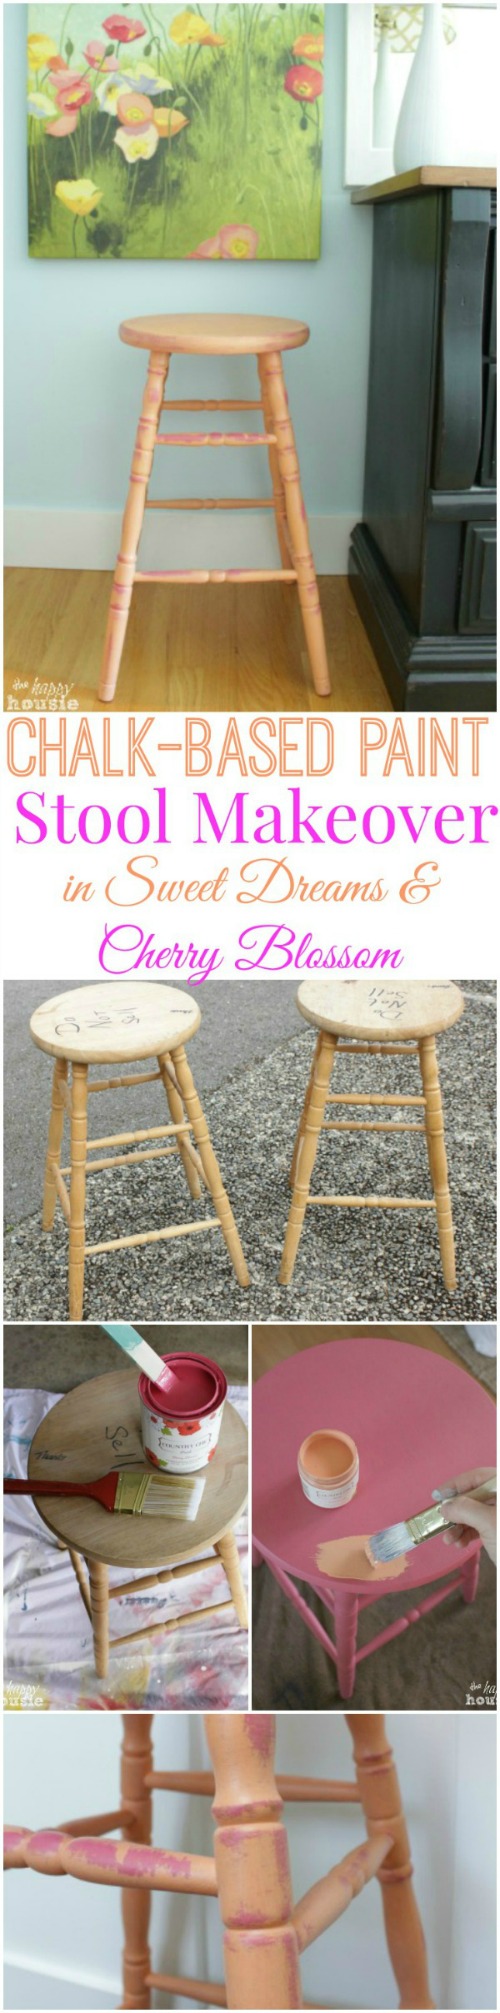 Chalk Based Paint Stool Makeover poster.